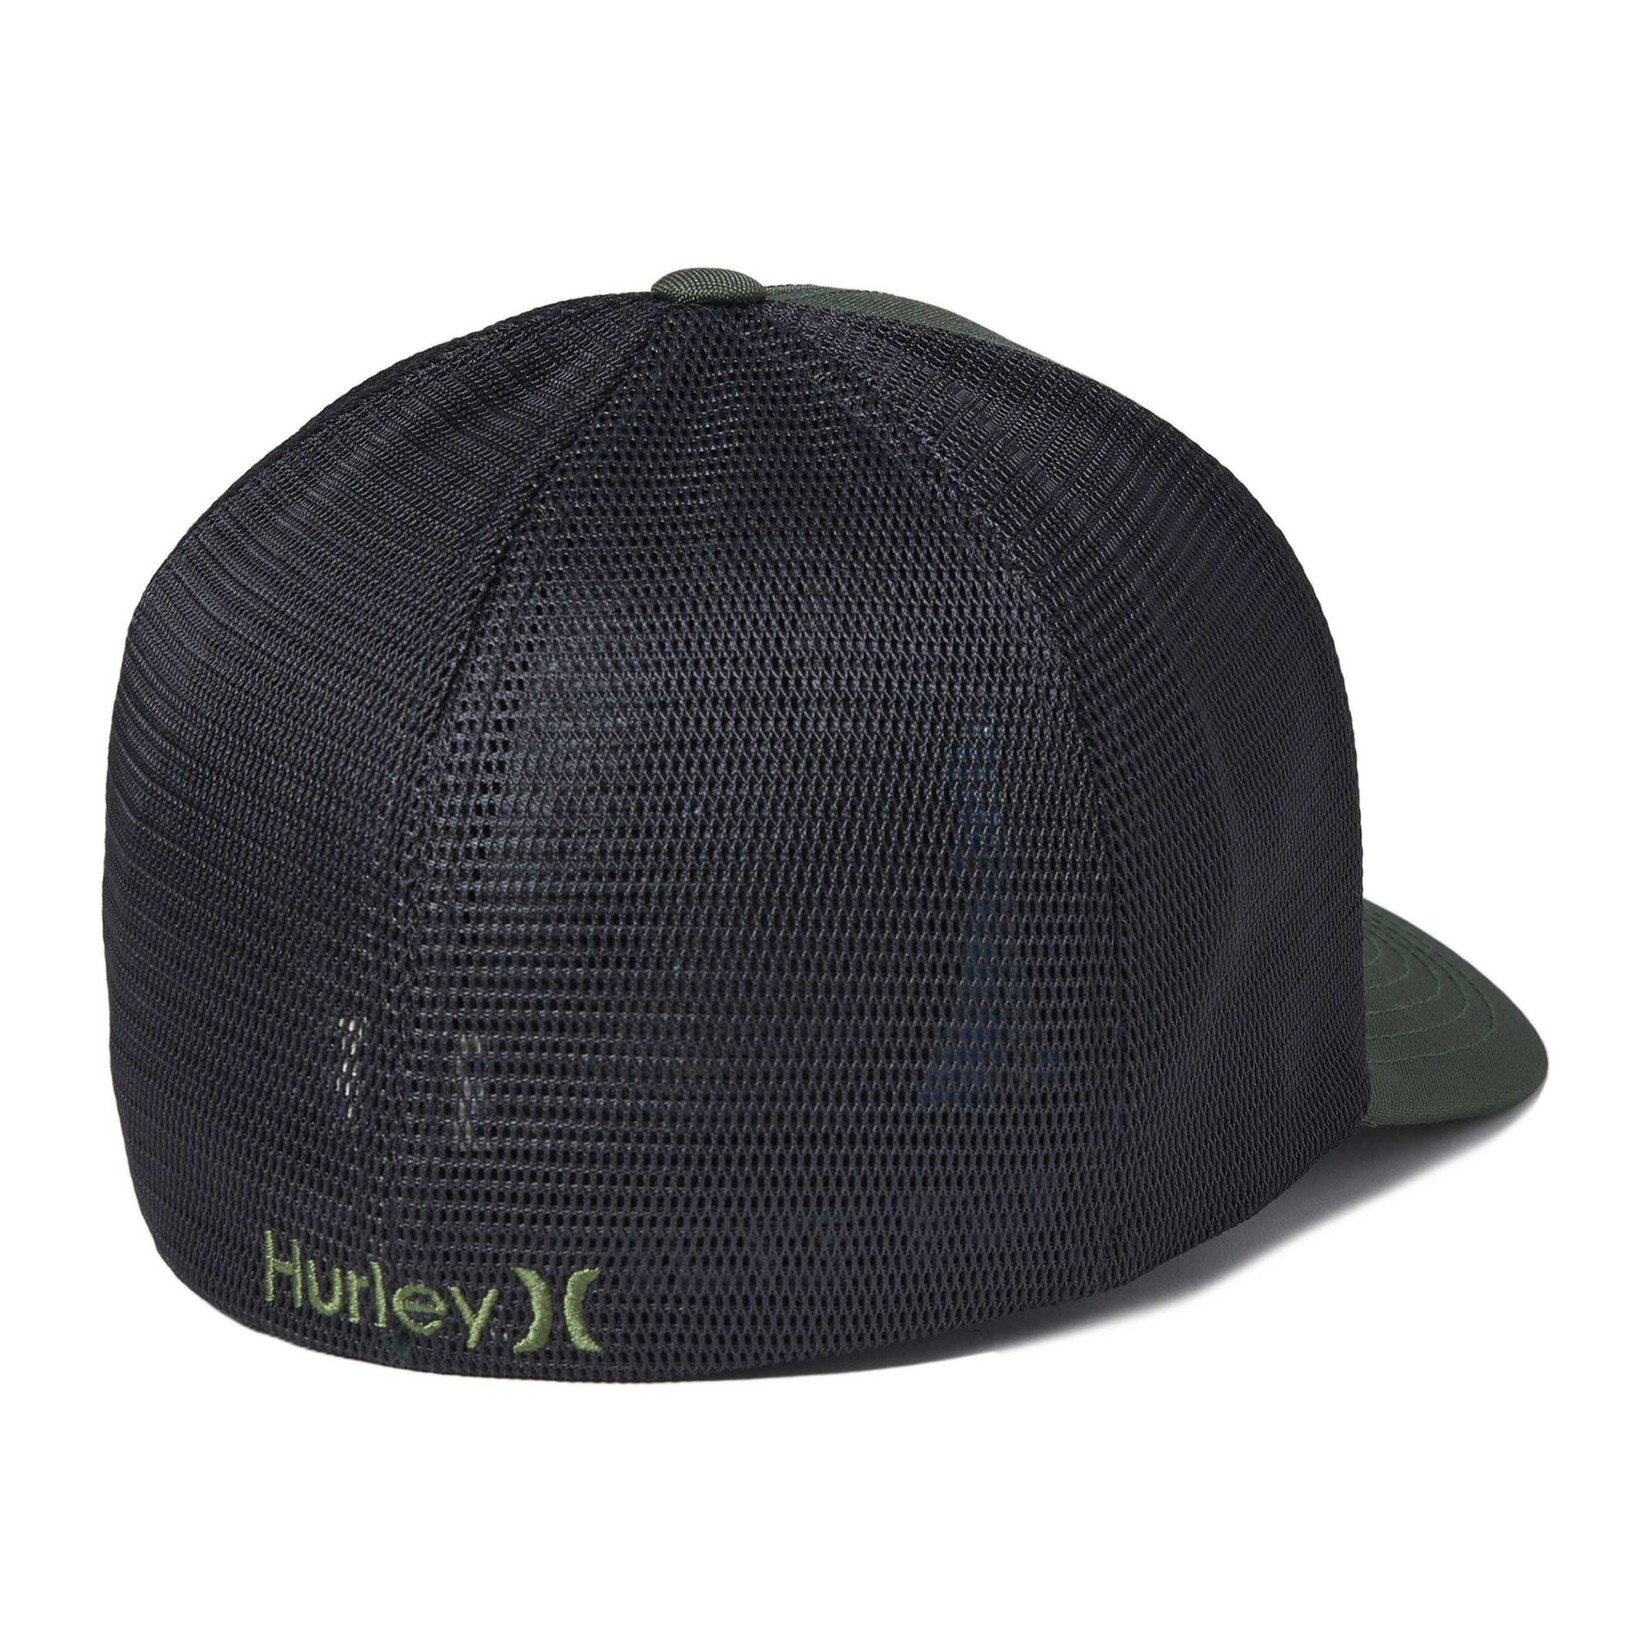 Hurley Hurley Hat, Oceanside Flex, Mens